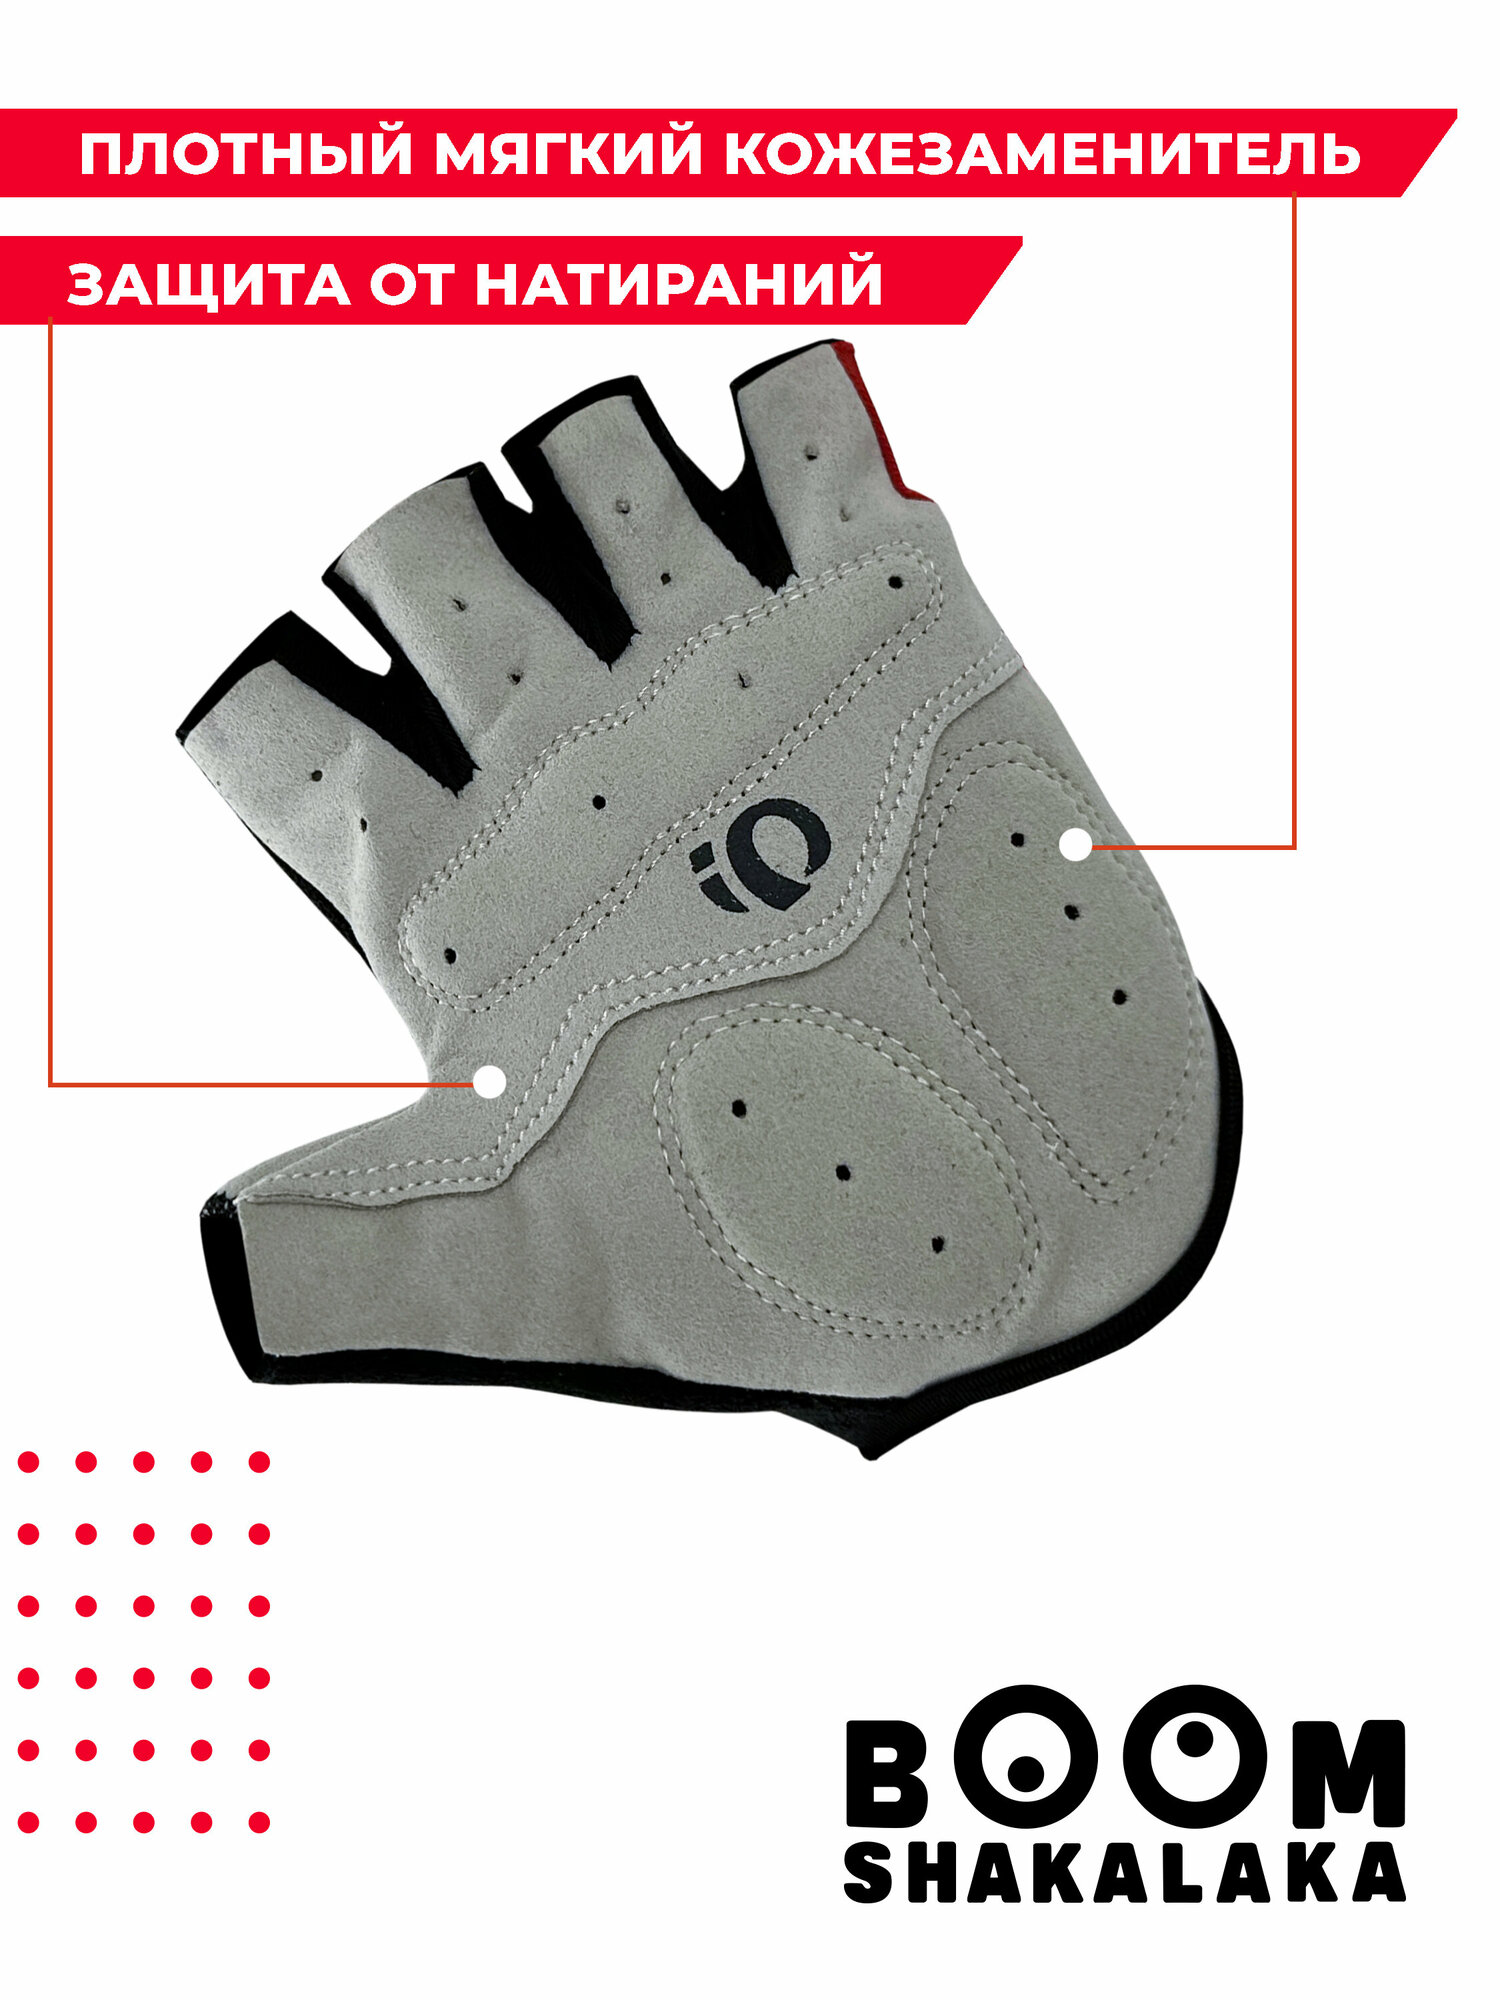 Перчатки для фитнеса Boomshakalaka, цвет черно-серо-красный, размер S, обхват ладони 180-190 мм.